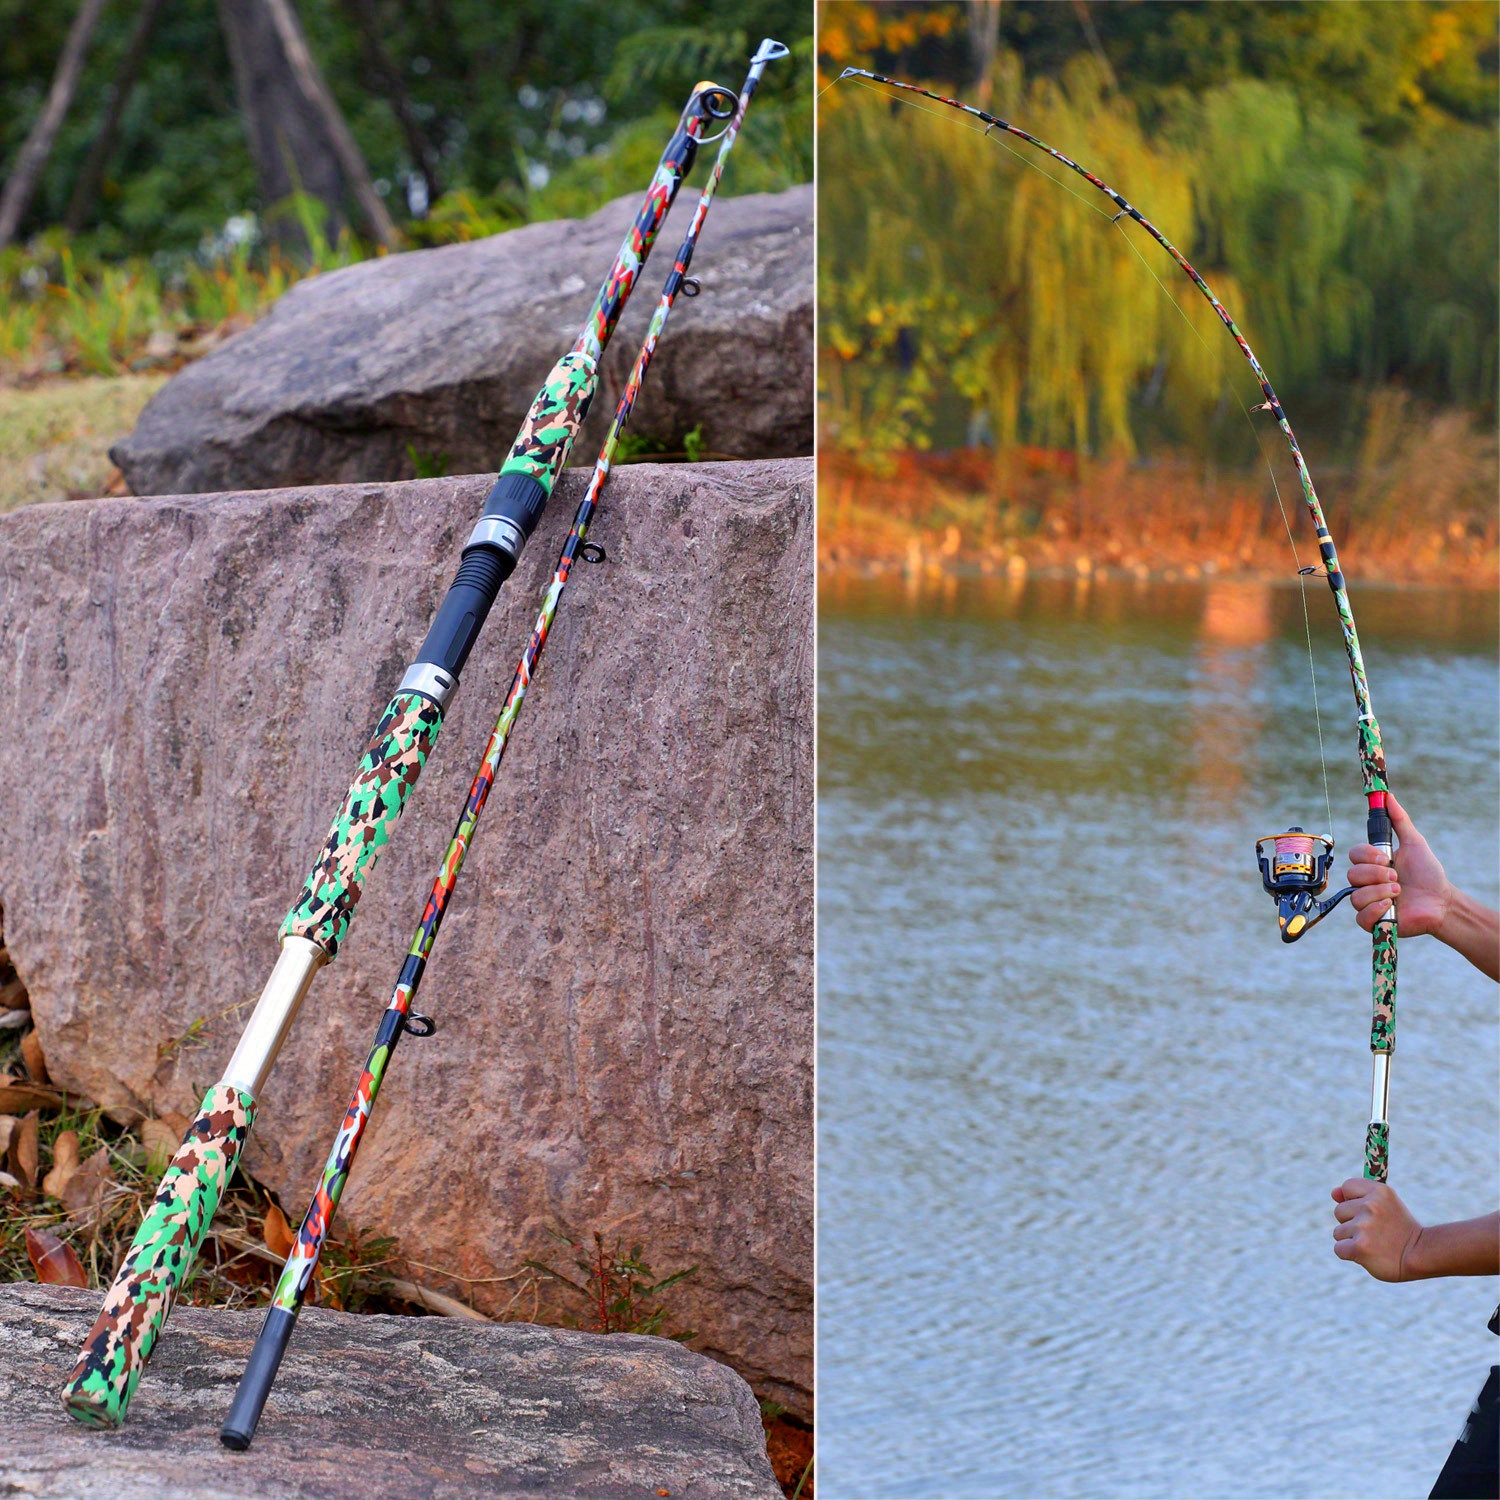 Sougayilang Fly Fishing Rod and Reel 9 FT Carbon Fiber Fishing Rod